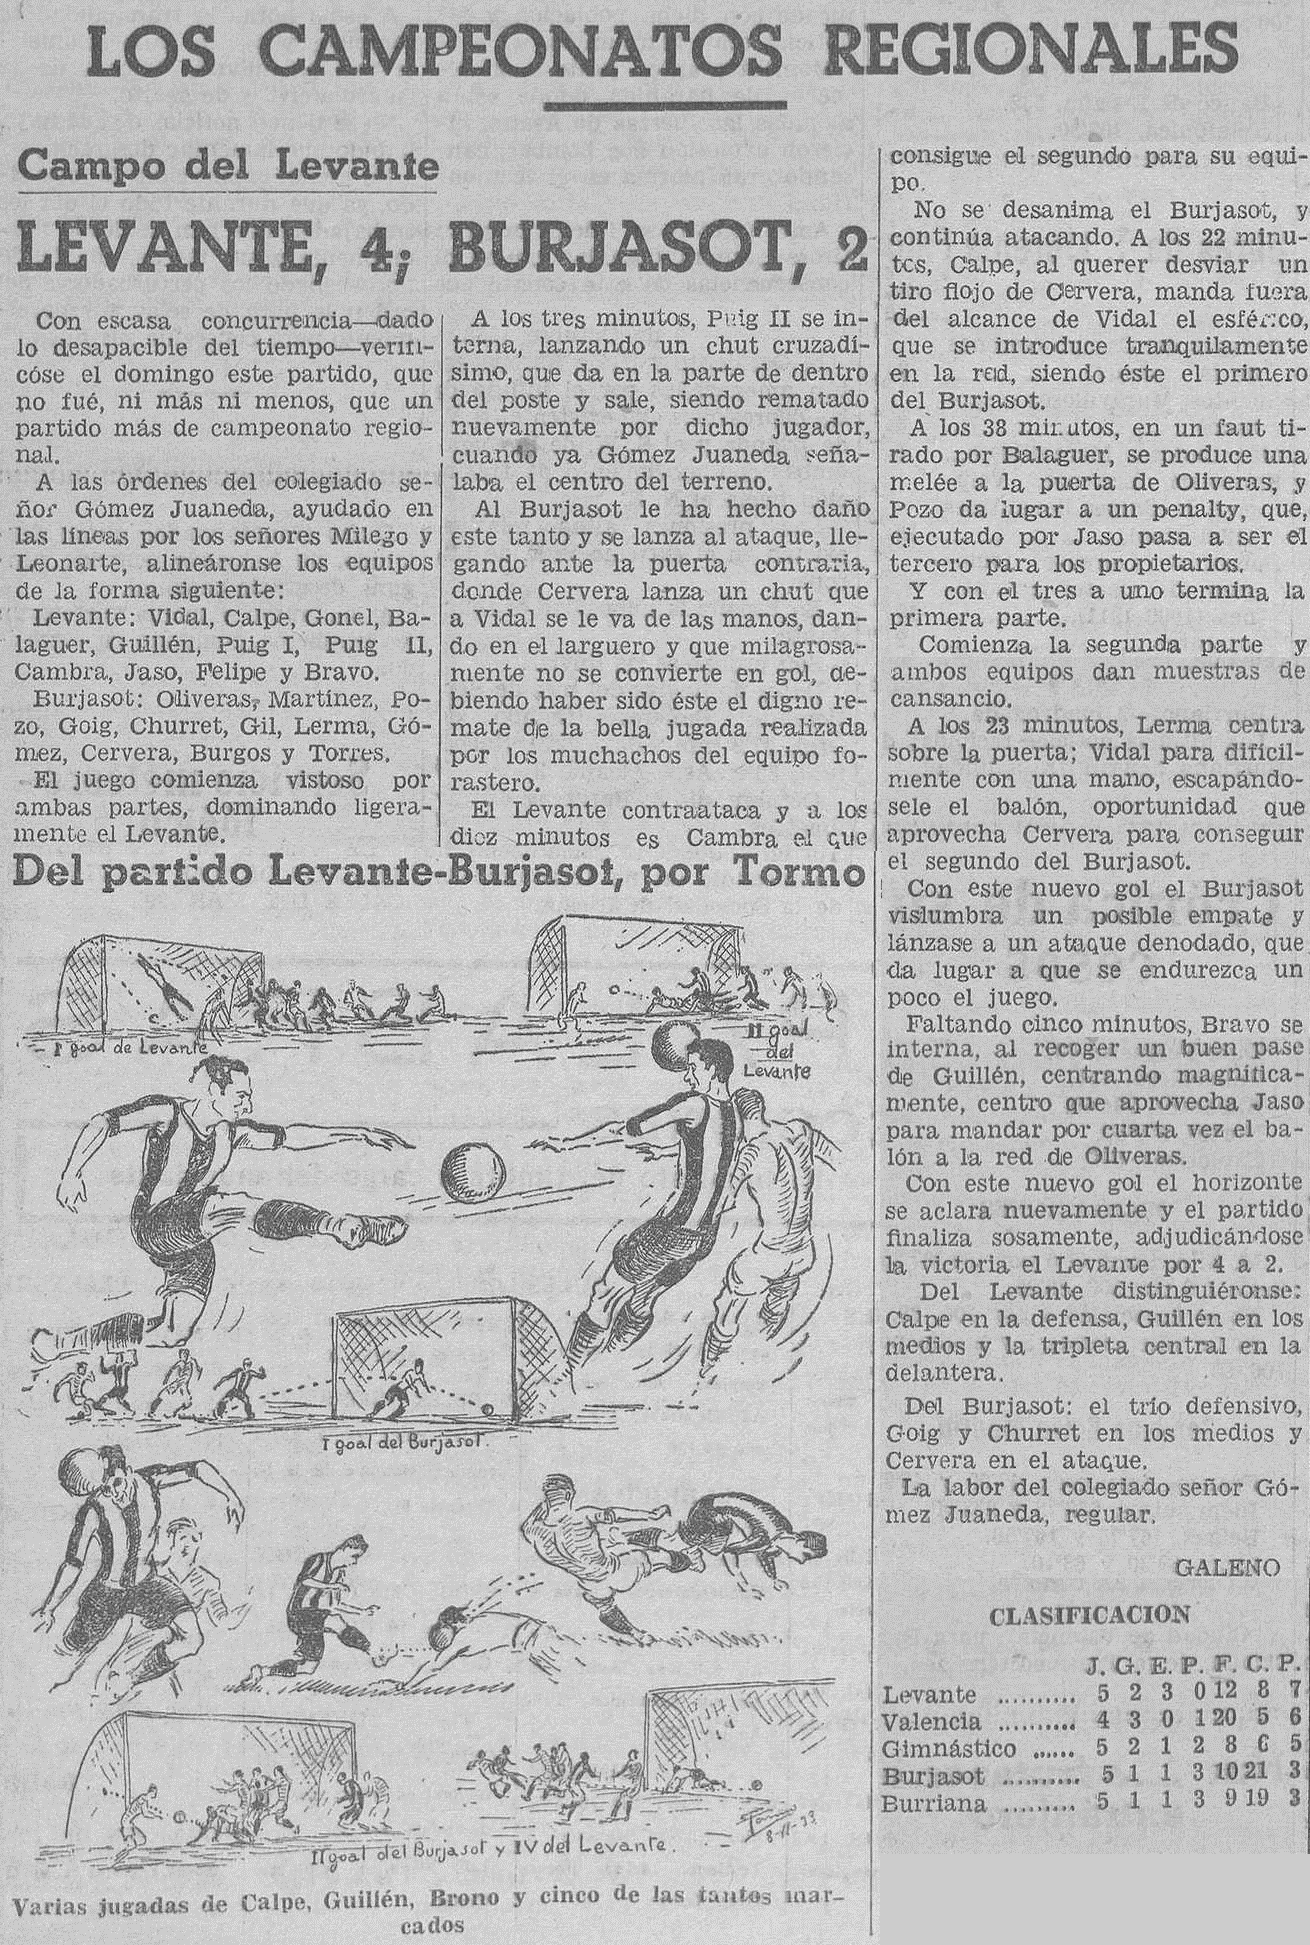 1933.10.08 (8 октября 1933), Леванте - Буржасот, 4-2.png